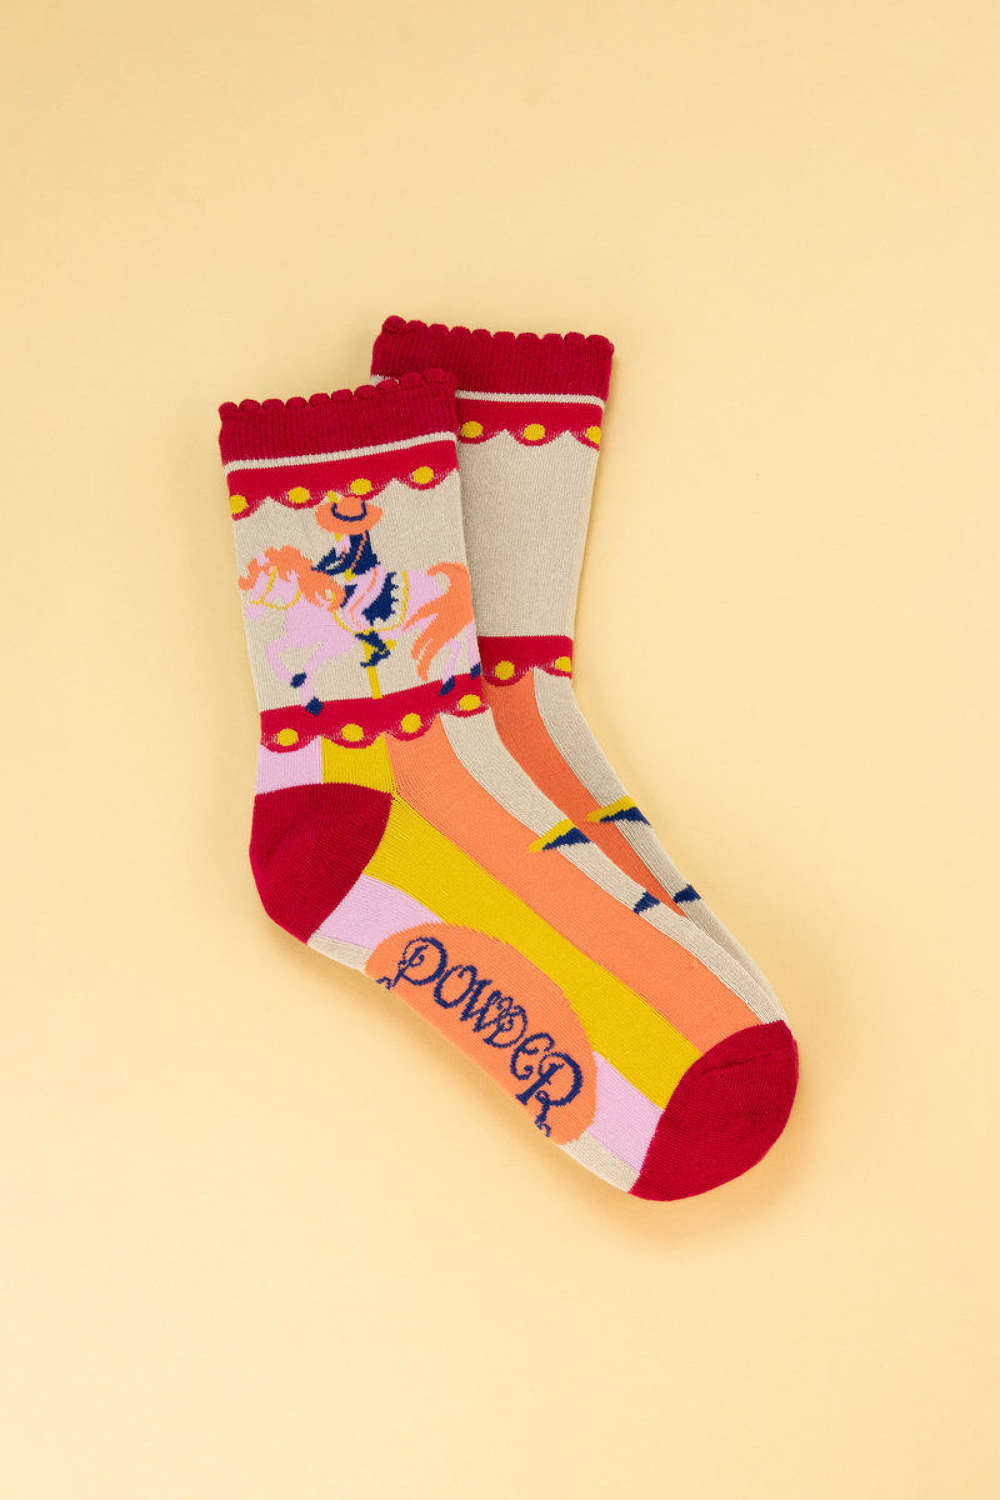 Powder -  Cowgirl ankle socks- one size